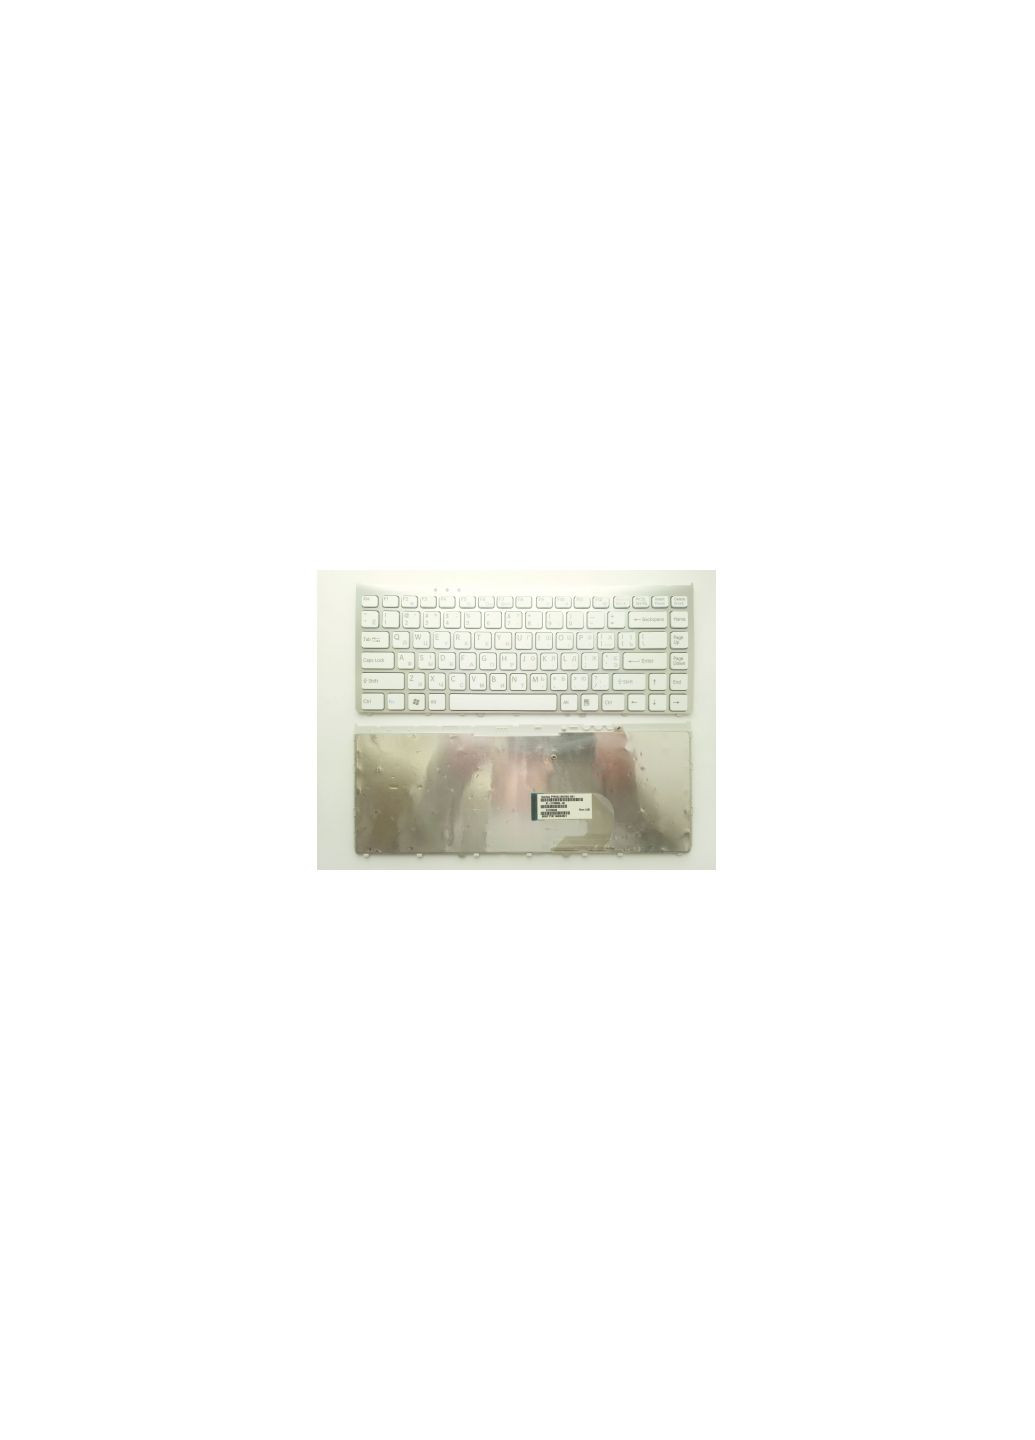 Клавиатура ноутбука VGNFW series белая UA (A43345) Sony vgn-fw series белая ua (276706397)